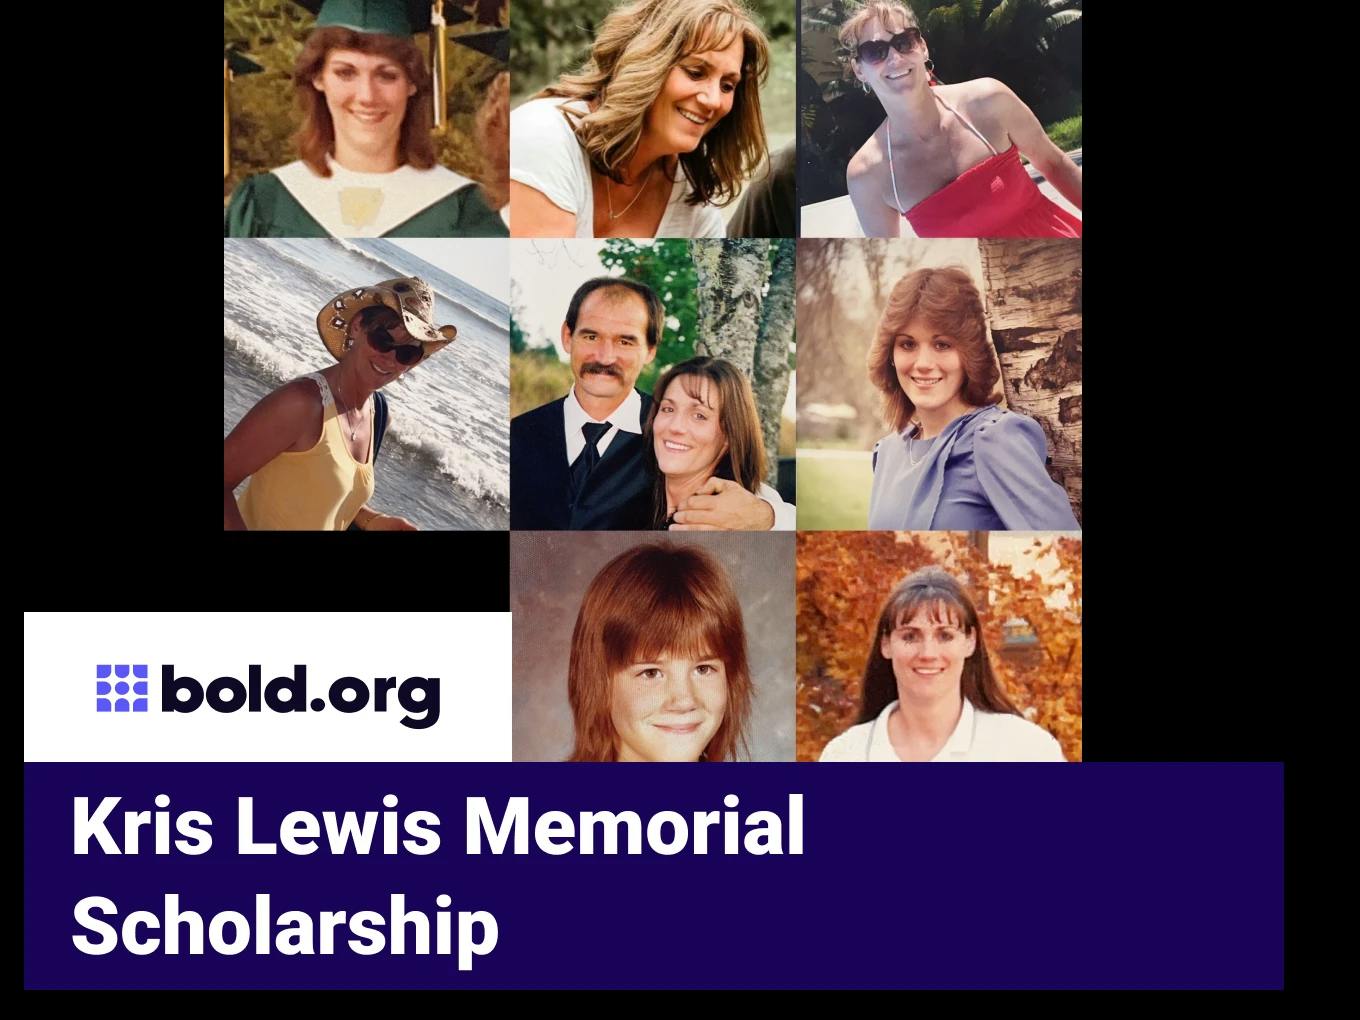 Kris Lewis Memorial Scholarship